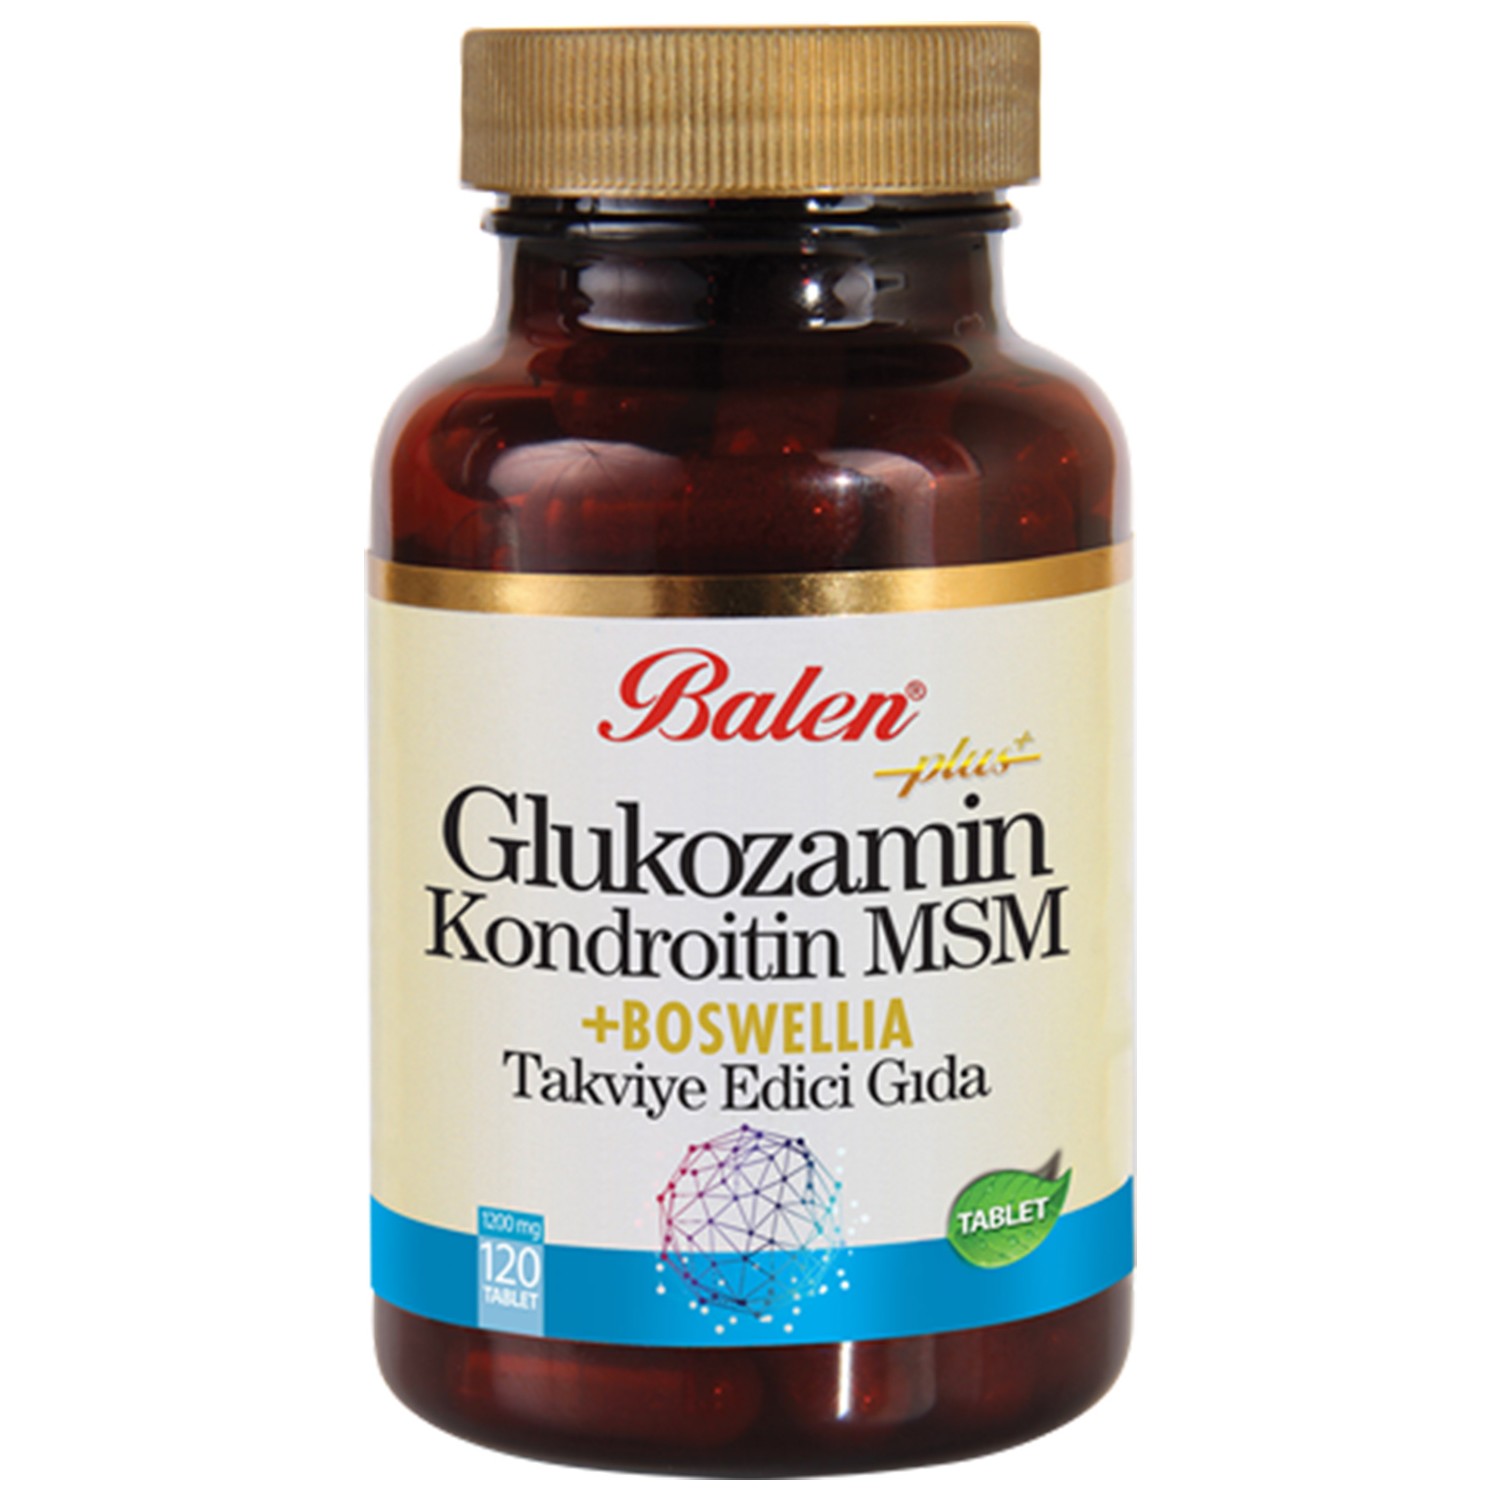 глюкозамин хондроитин и mcm от nevo organic 60 таблеток Активная добавка глюкозамин Balen Chondroitin Msm и Boswellia, 120 капсул, 1200 мг